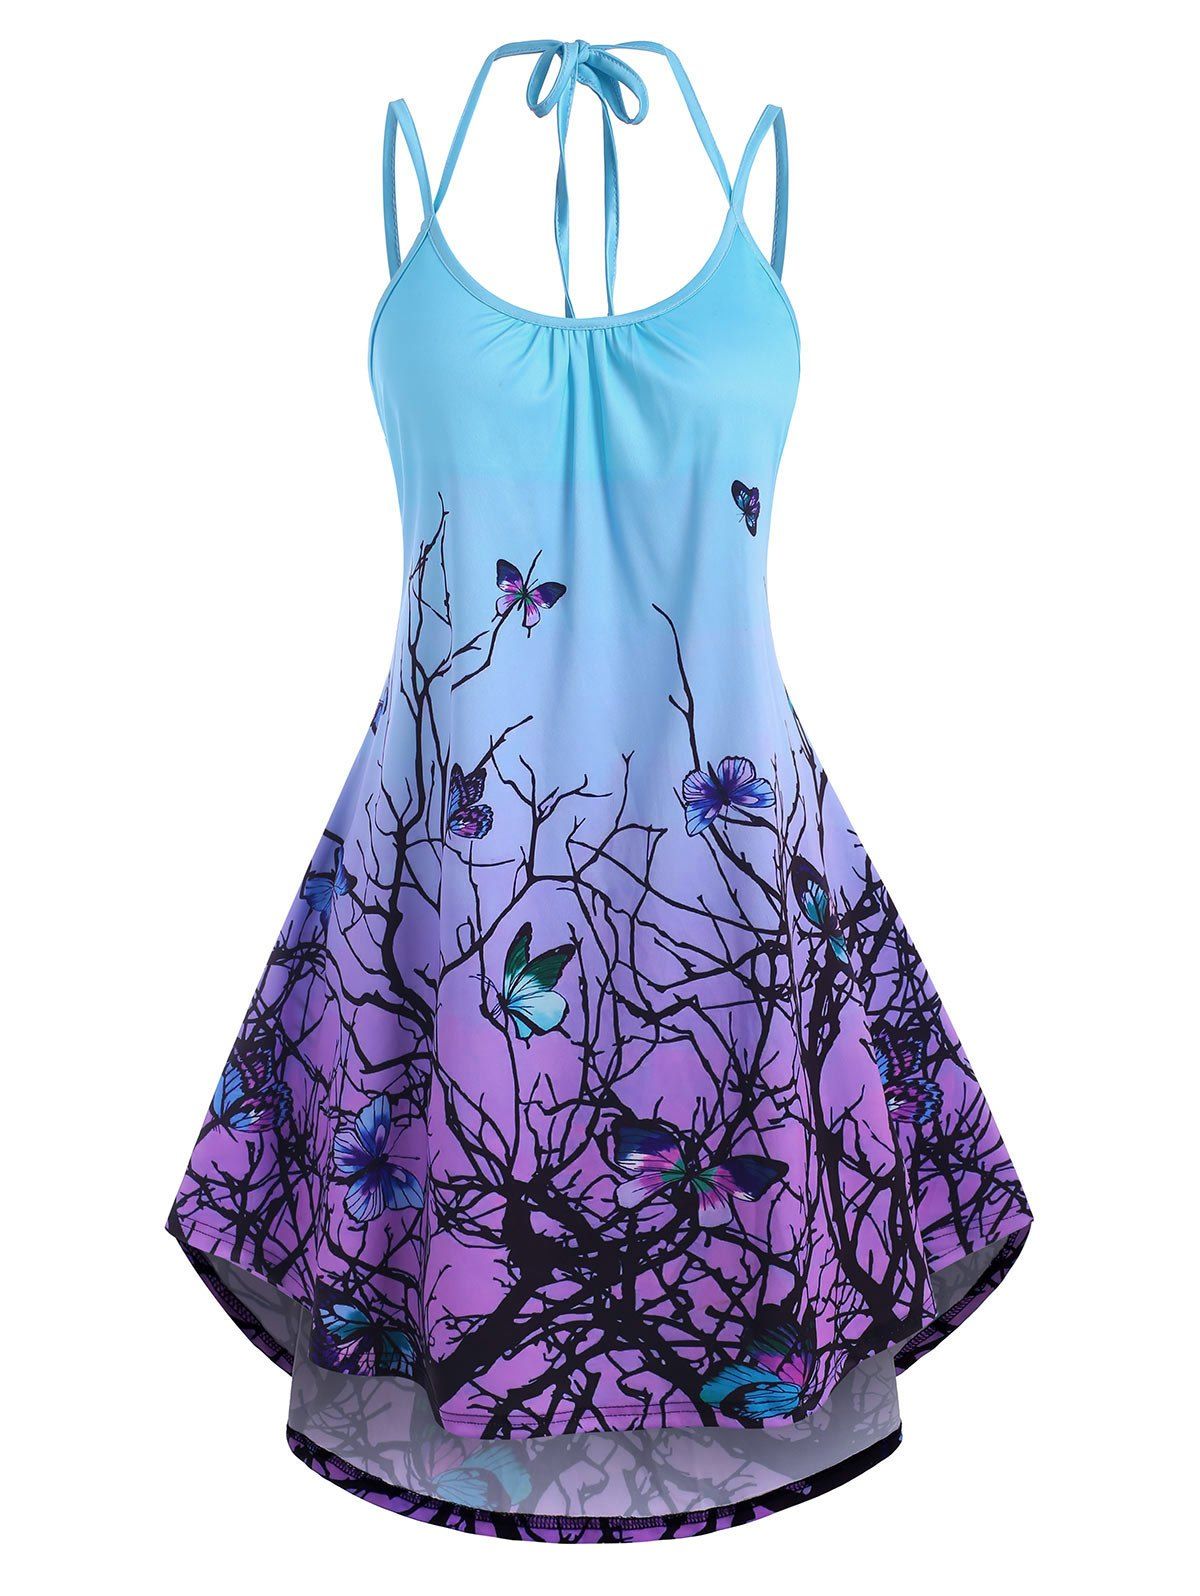 Summer Ombre Bohemian Flower Butterfly Print High Low Dress - PURPLE M